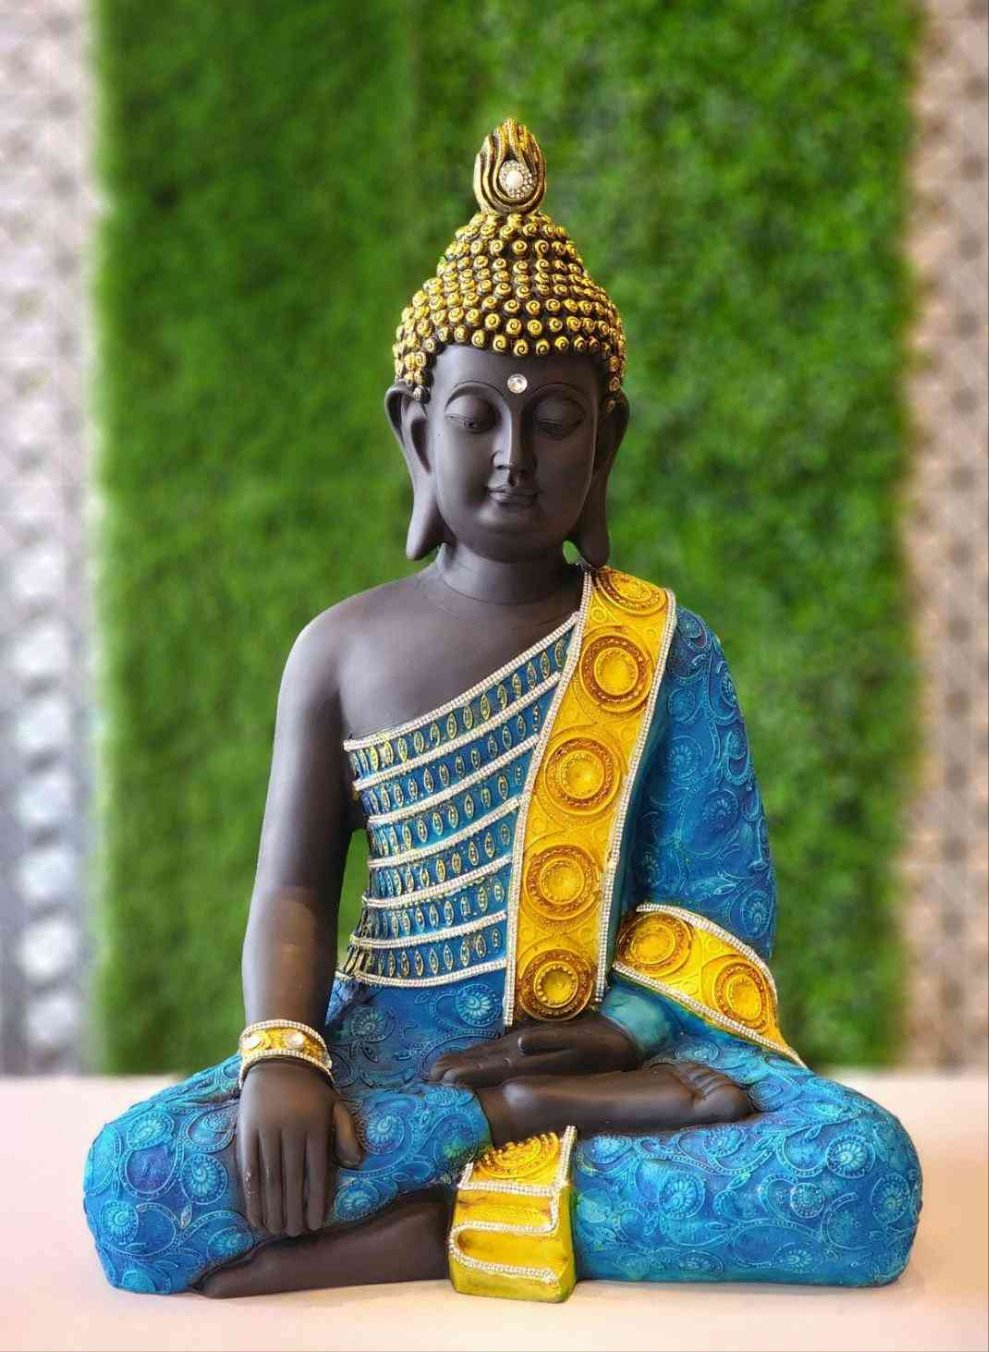 Polyresin Buddha ji Statue with stones decor